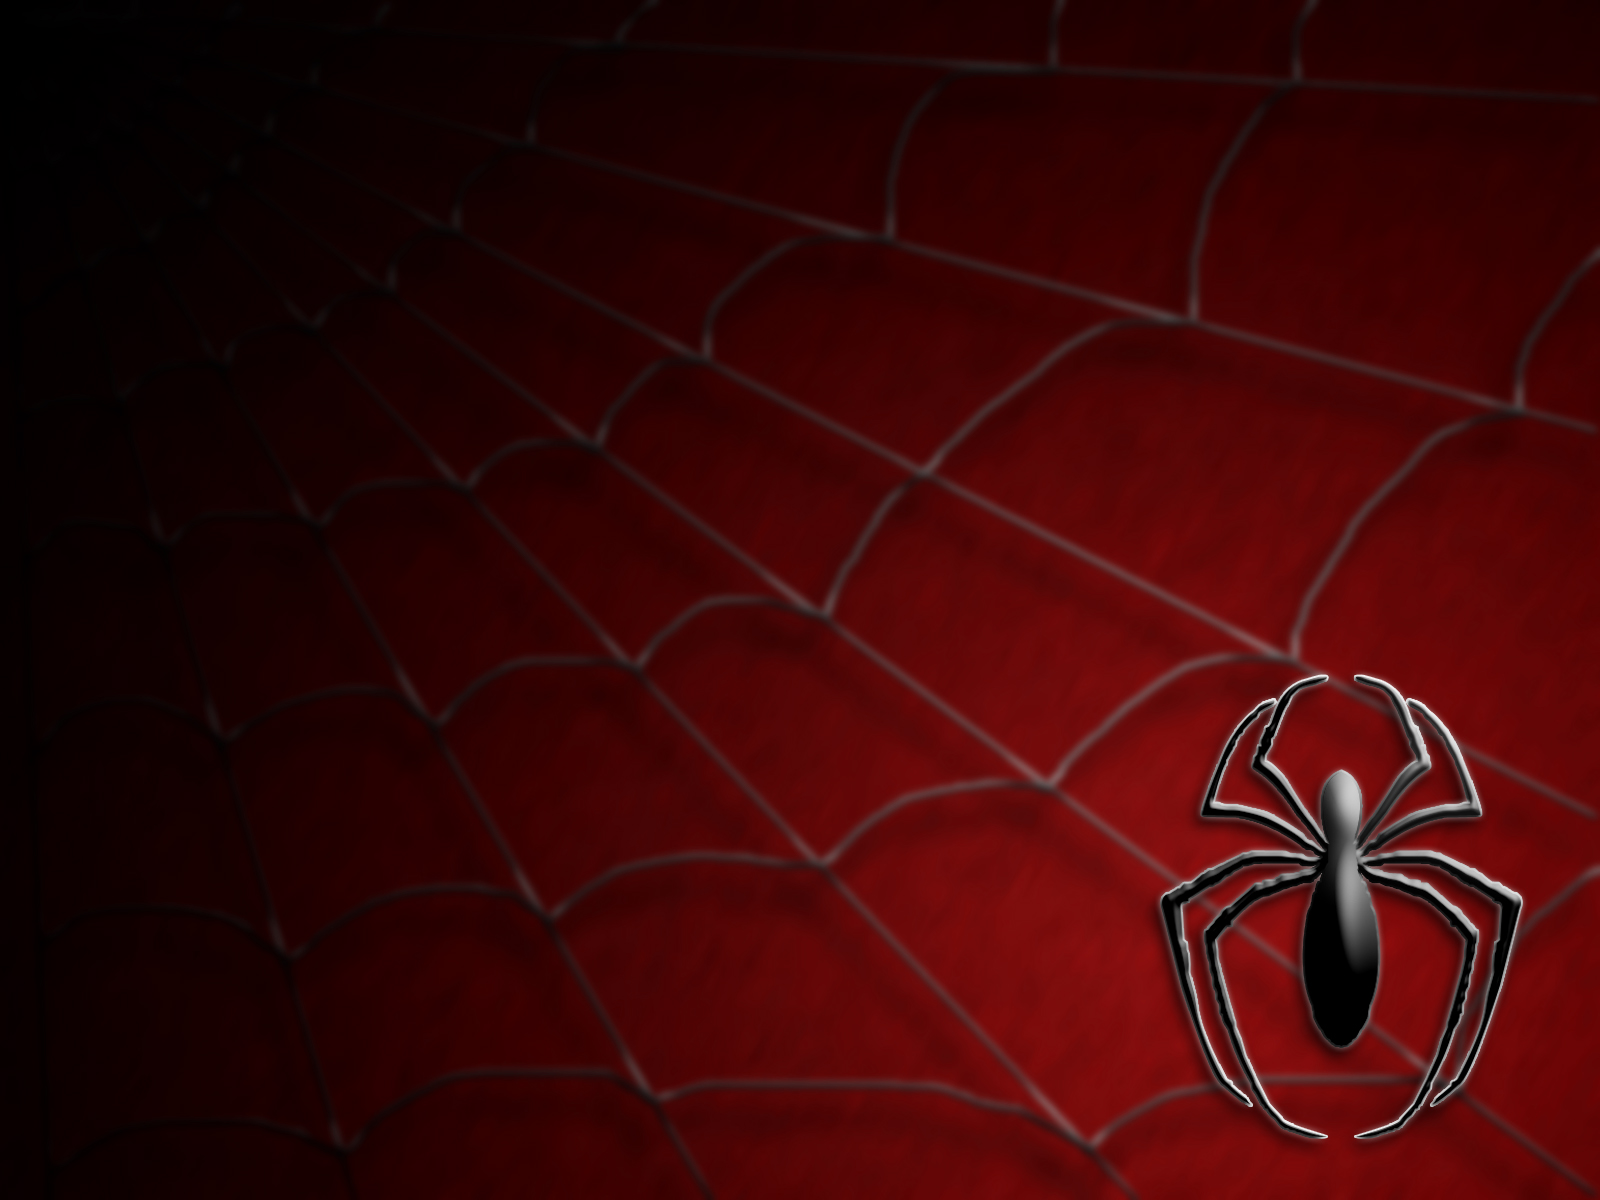 Wallpaper Spider Man Pc Desktop